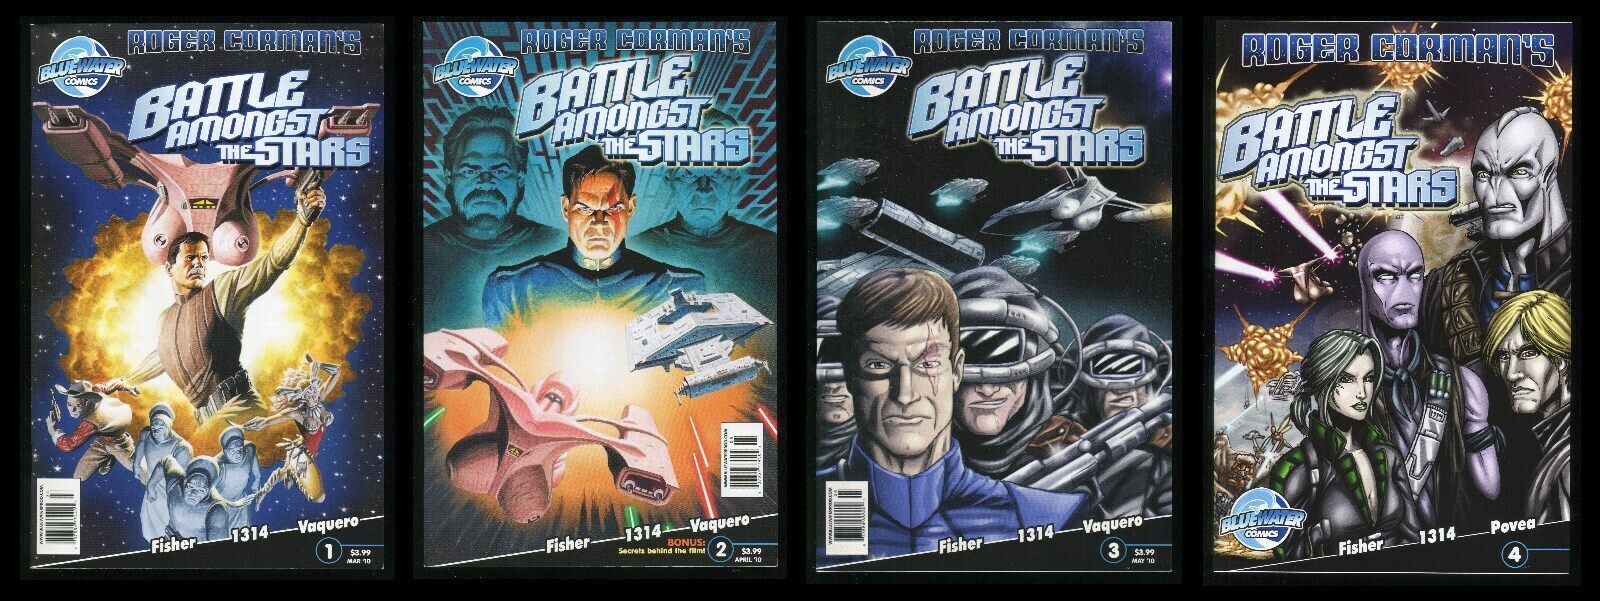 Battle Amongst the Stars Comic Set 1-2-3-4 Corman Beyond the Stars Movie Prequel